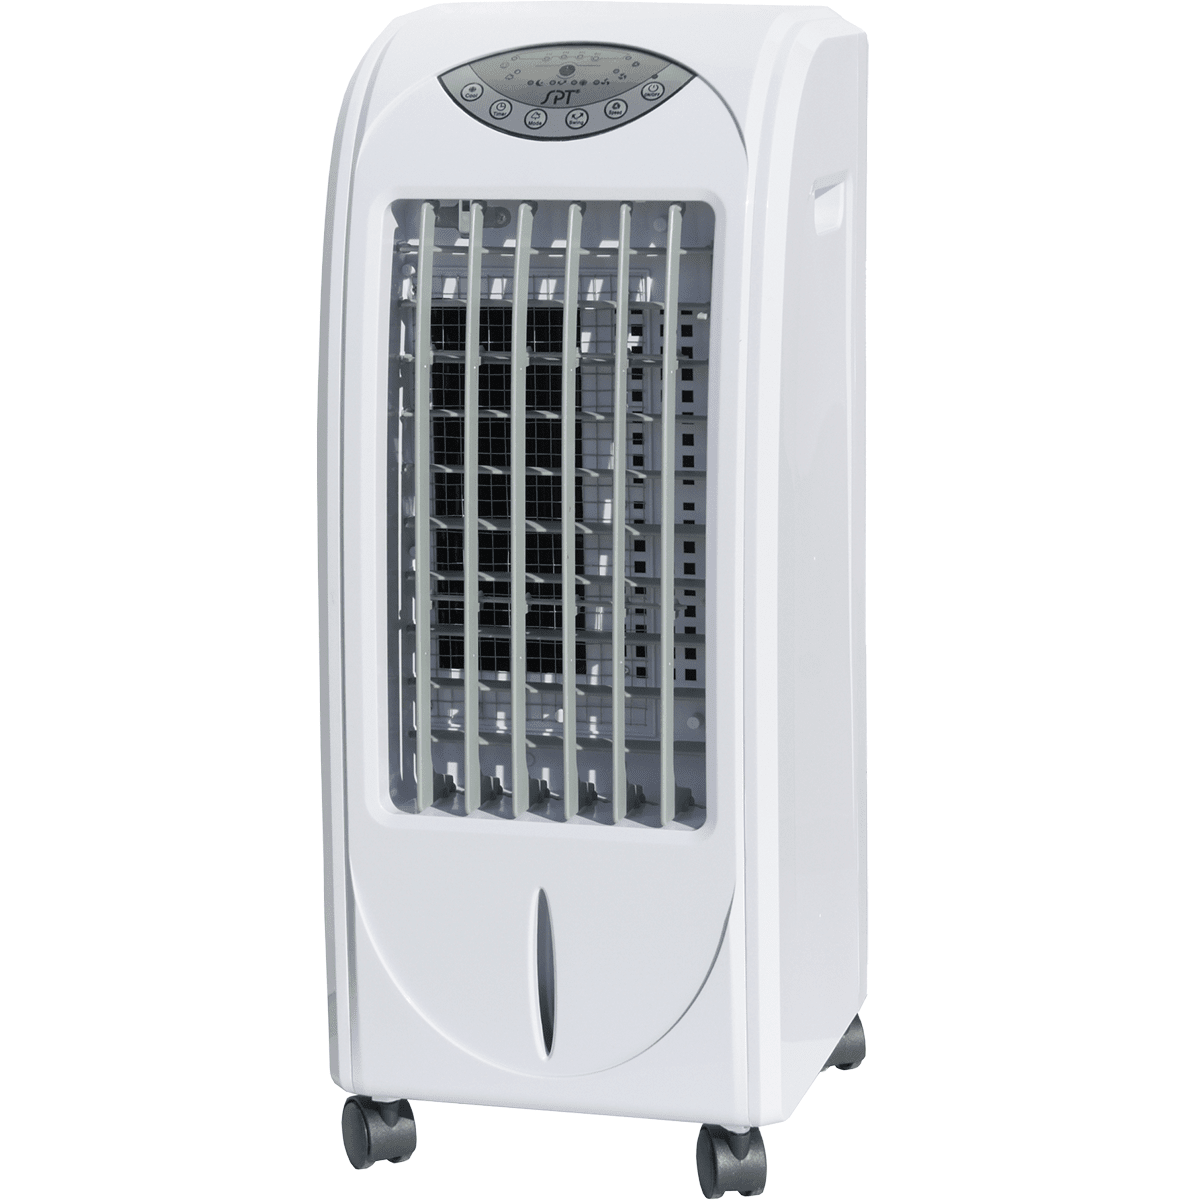 Sunpentown Spt Sf-615h Evaporative Air Cooler, Ultrasonic Humidifier, & Fan